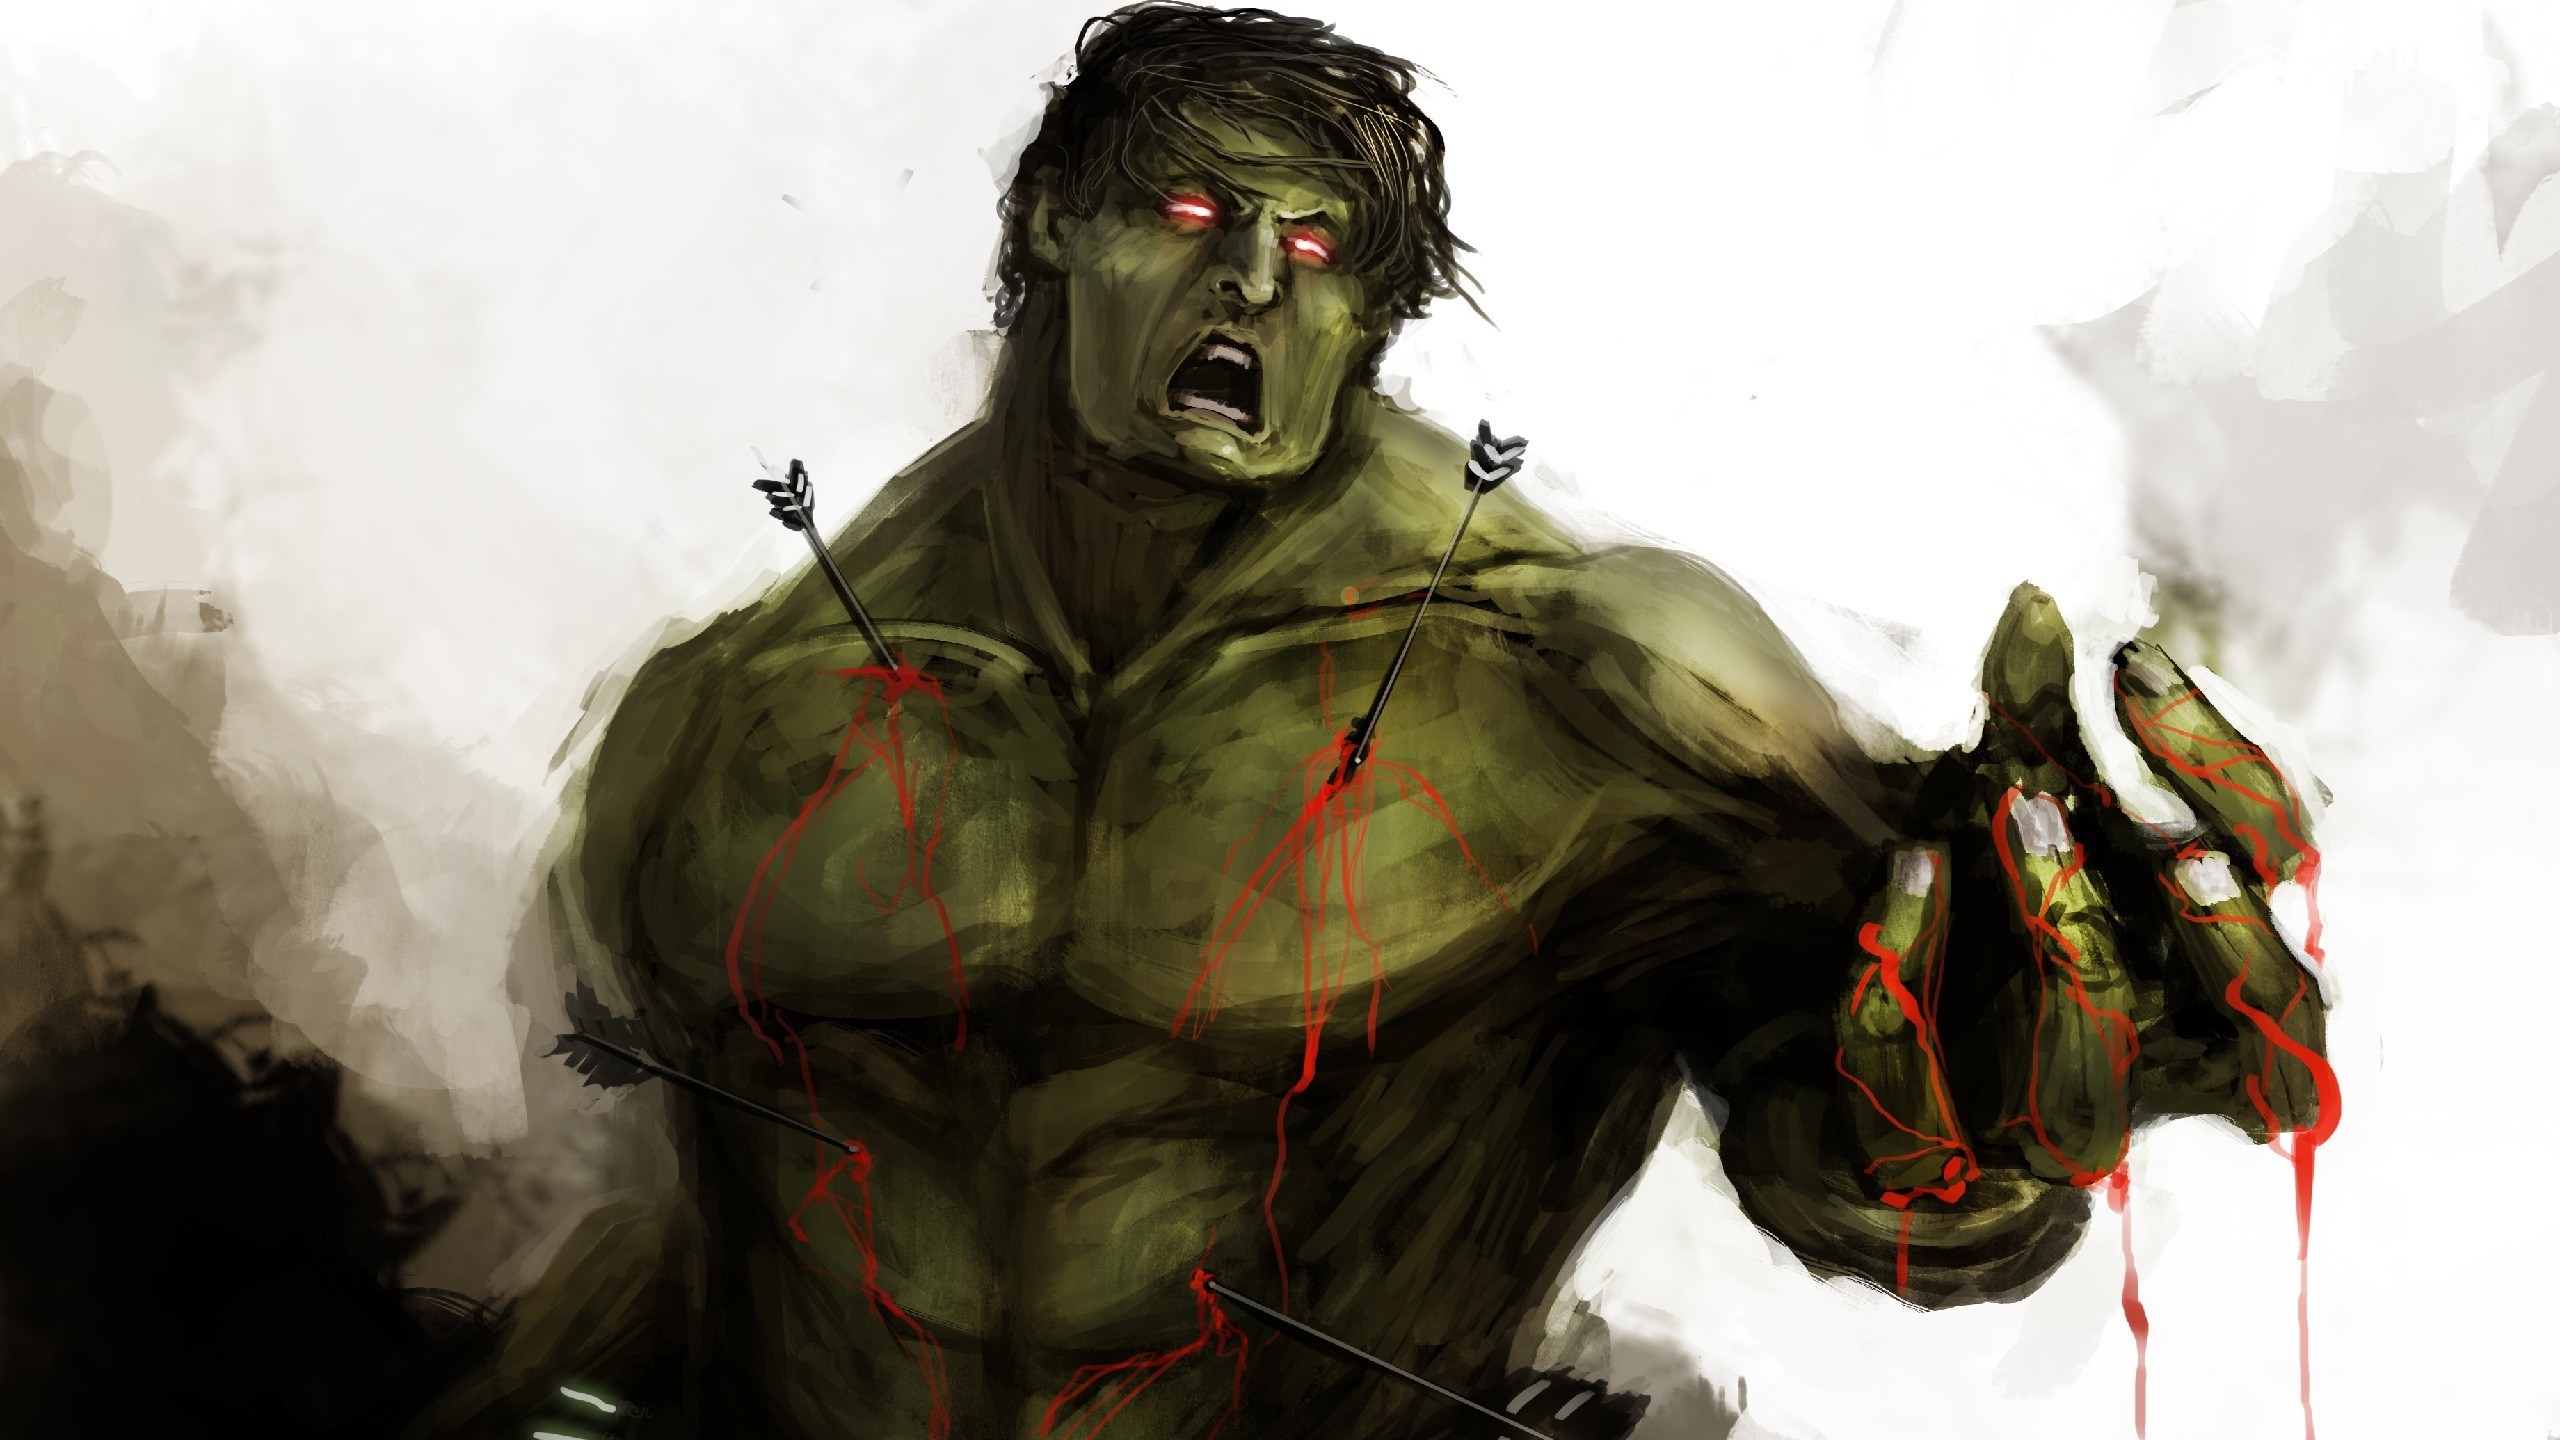 General 2560x1440 The Avengers fantasy art Hulk blood glowing eyes red eyes arrows